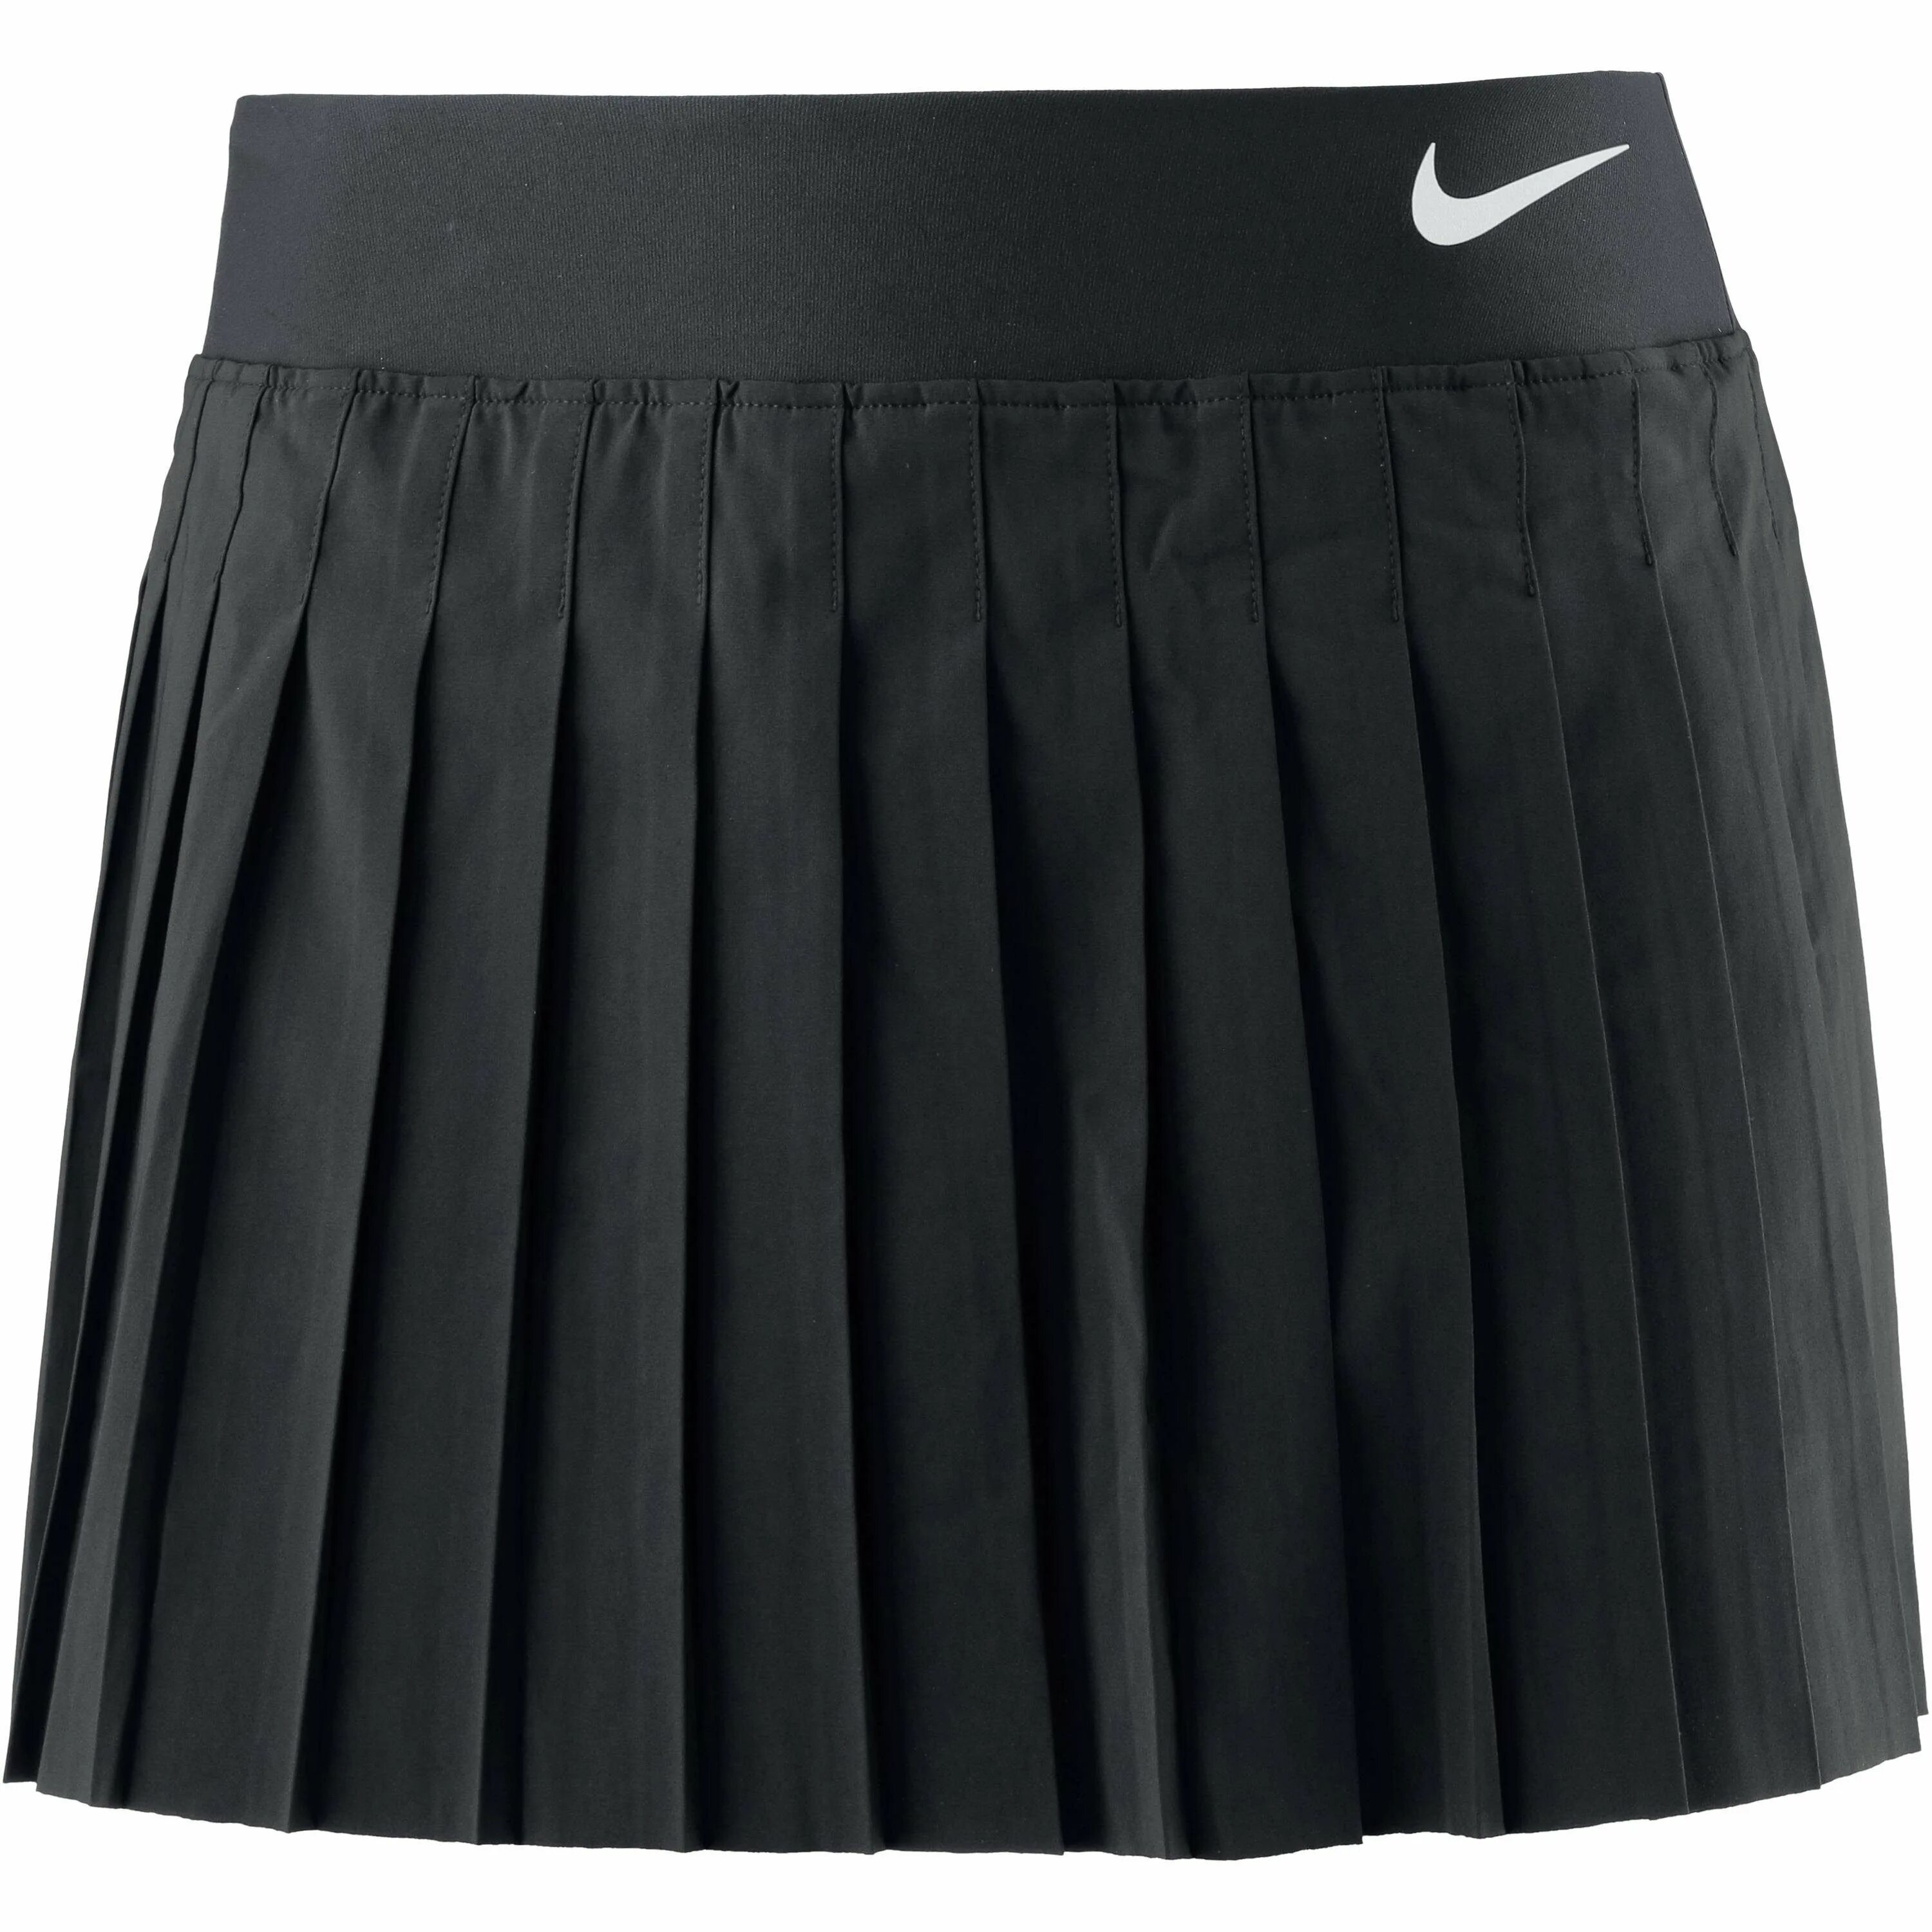 Юбки черные магазин. W6235r Black теннисная юбка Alo. Befree юбка теннисная черная. Теннисная юбка 2020 тренд. Теннисная юбка Ив сен Лоран.